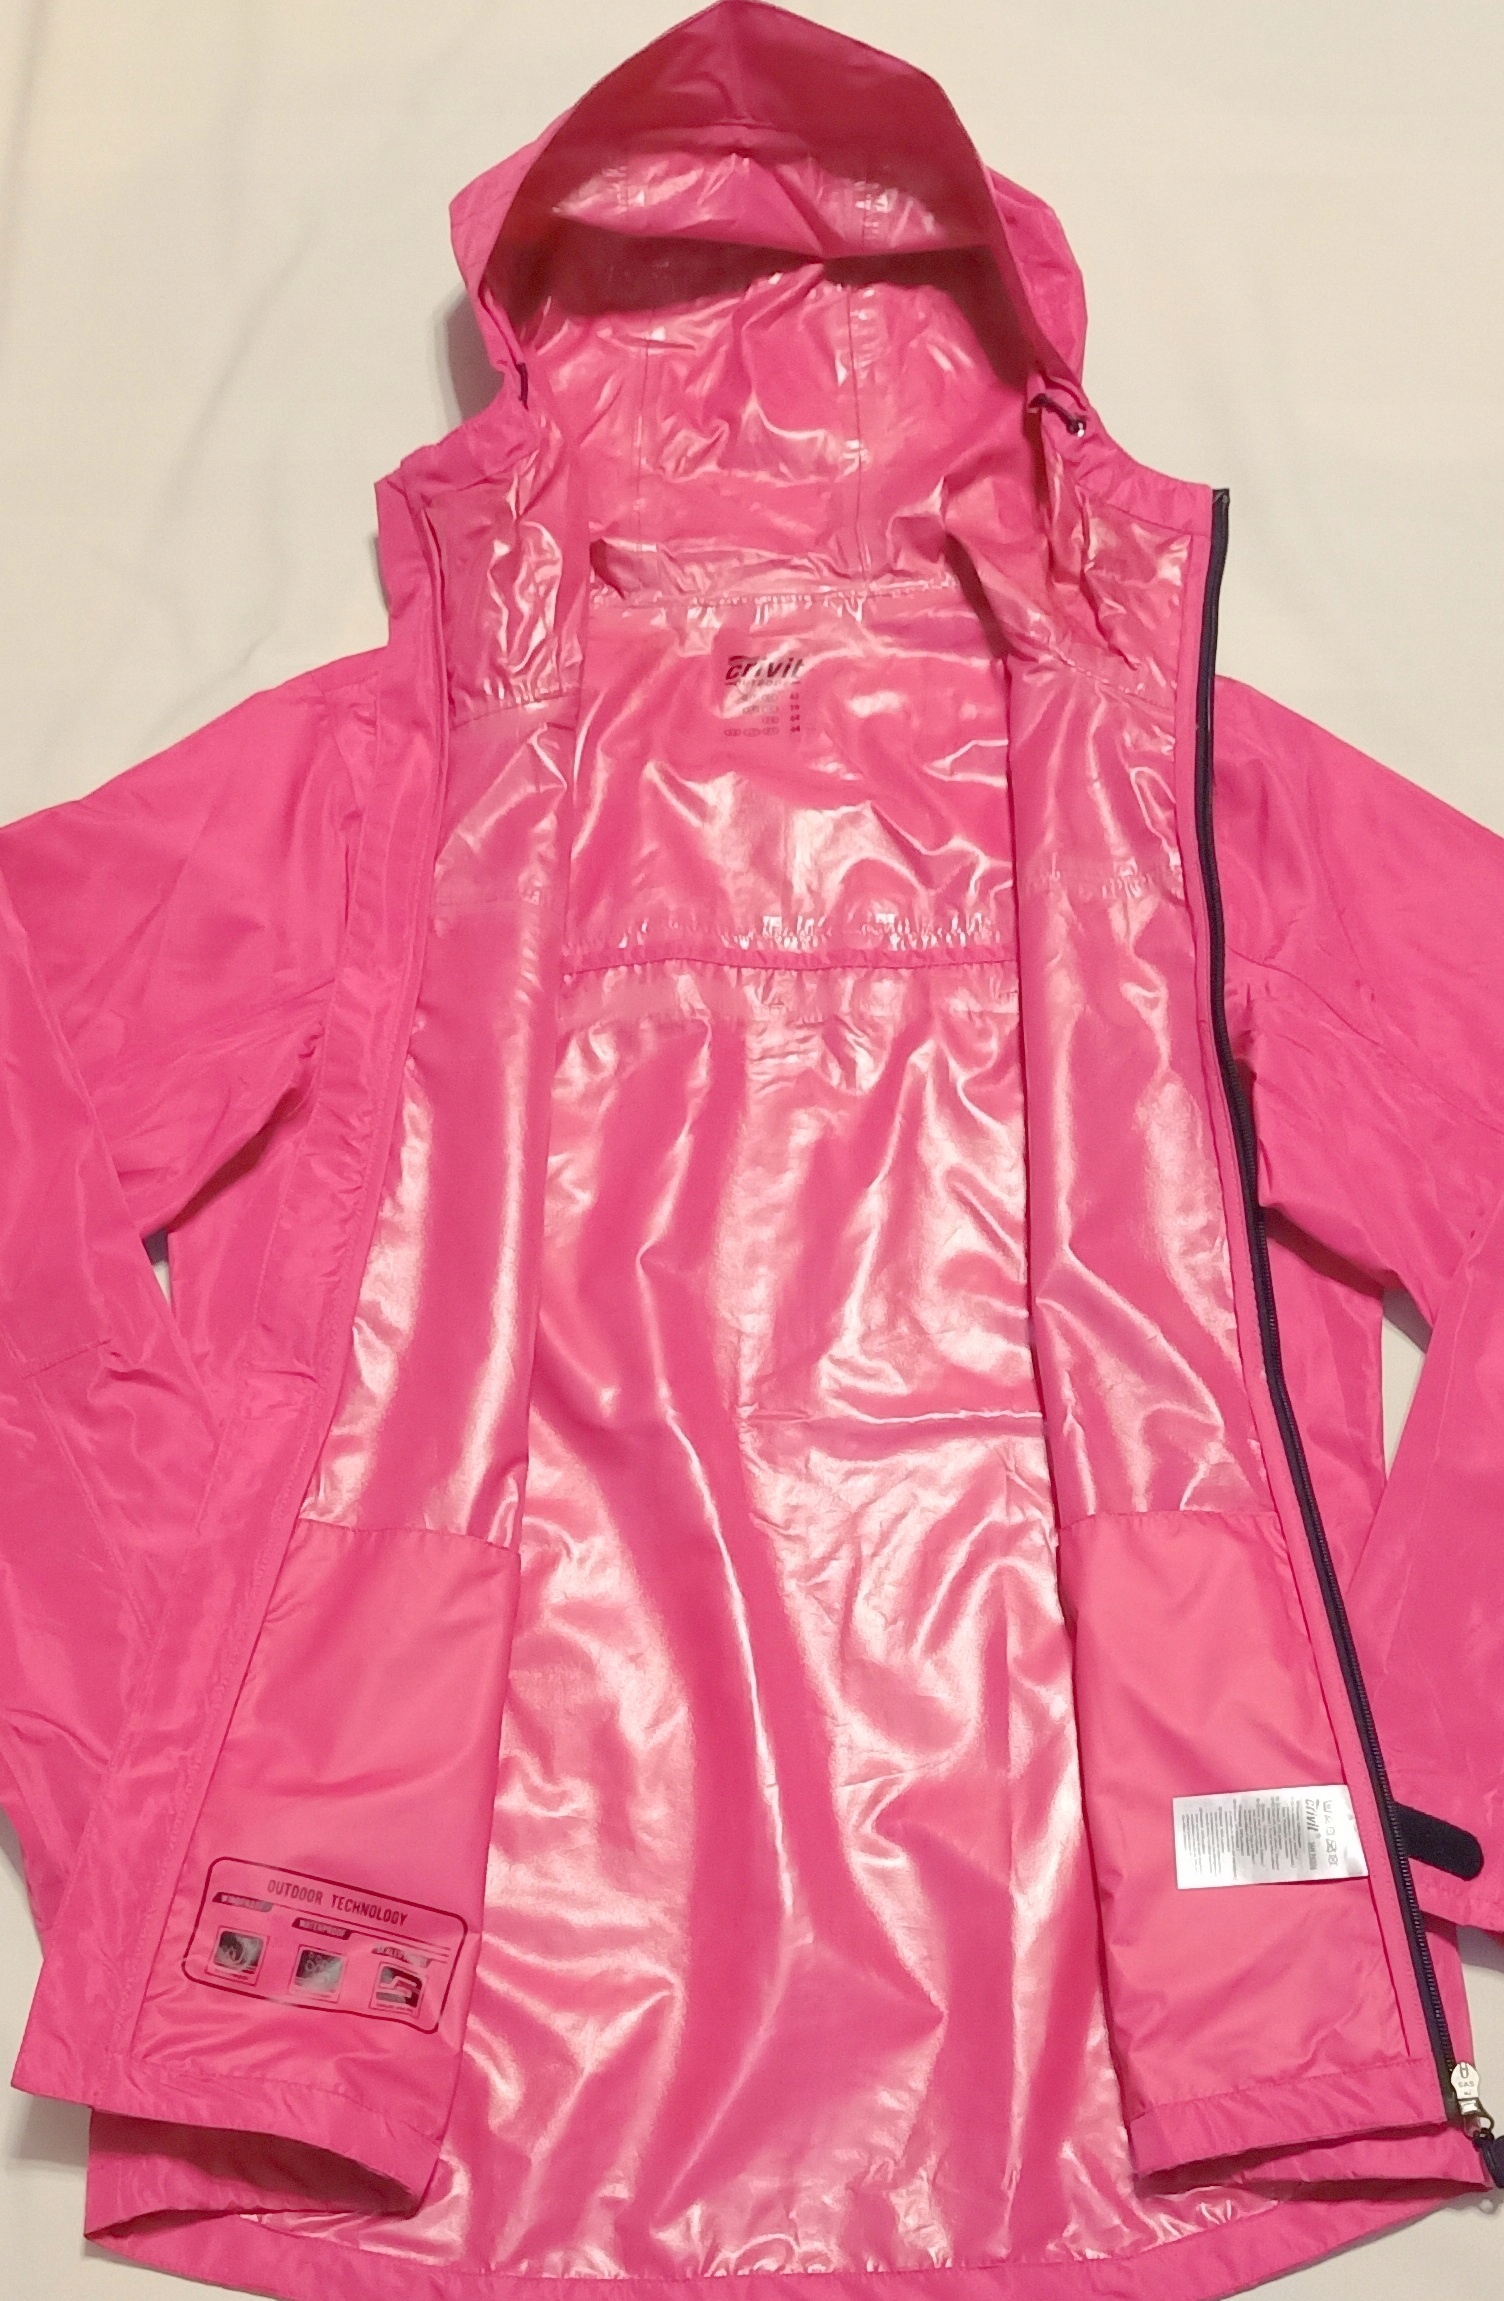 Pink Crivit rain jacket